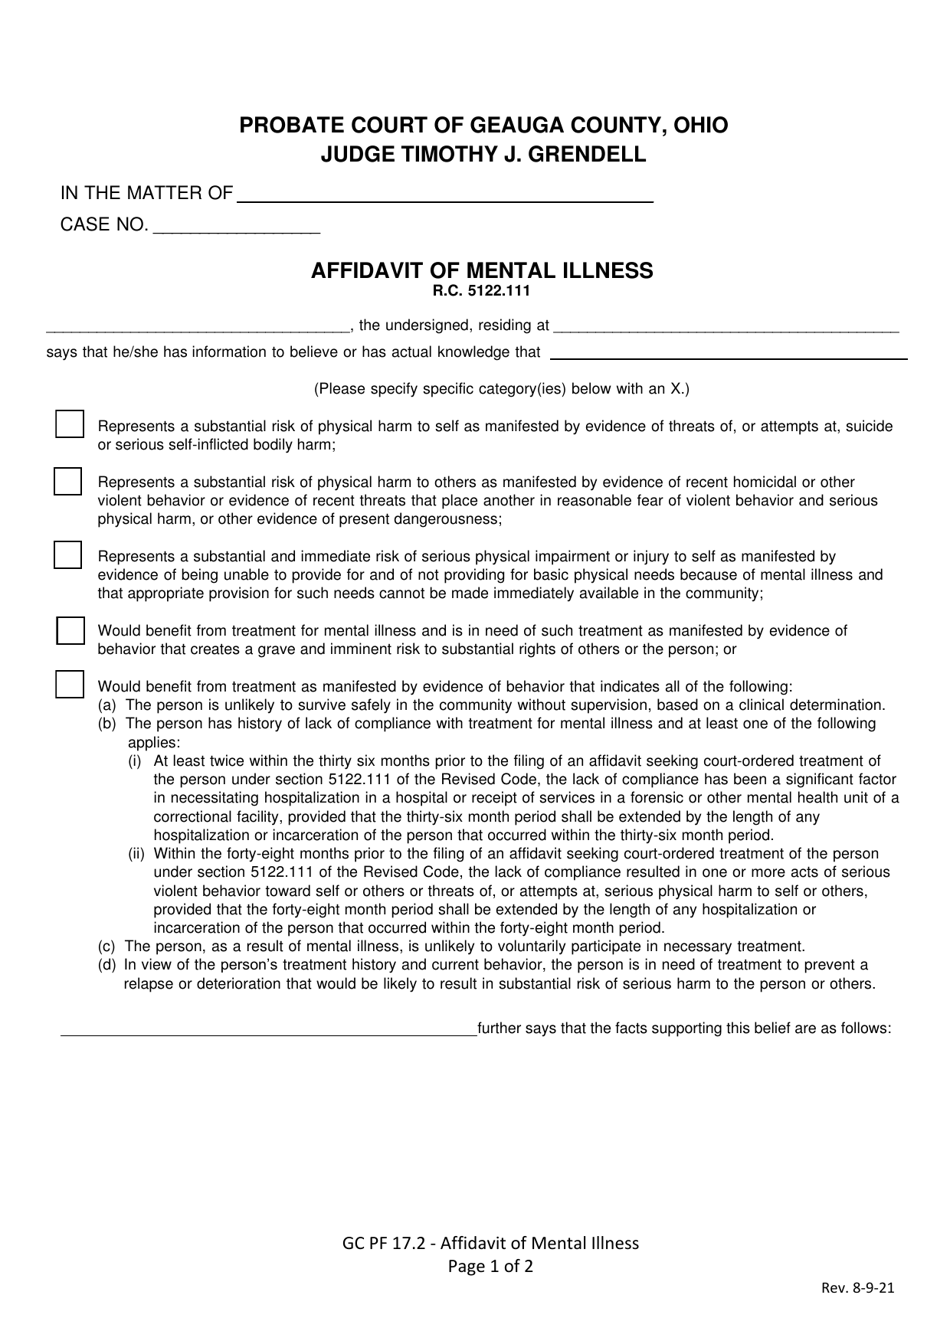 Form GC PF17.2 Affidavit of Mental Illness - Geauga County, Ohio, Page 1